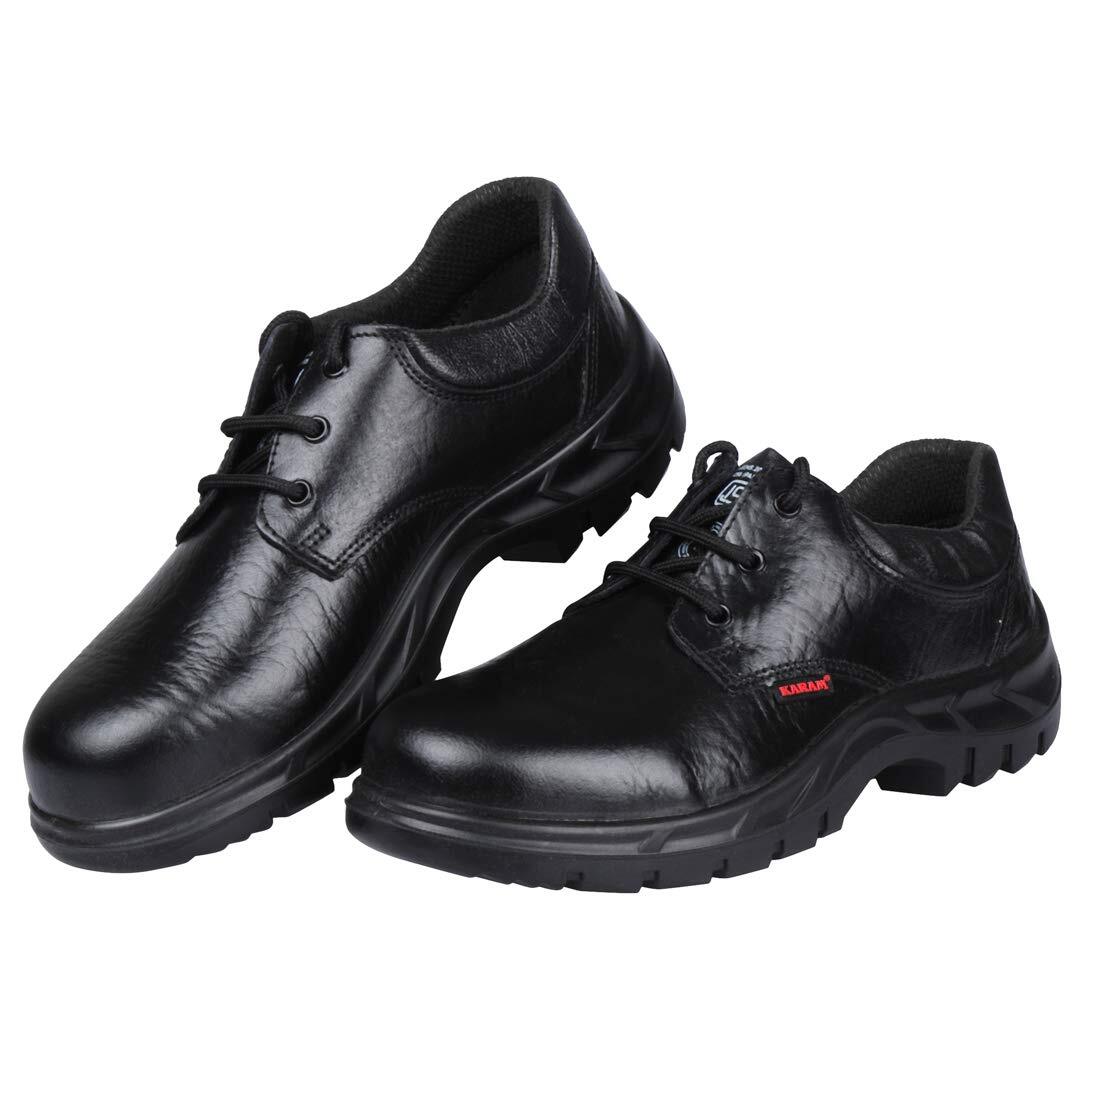 Karam FS05 Safety Shoes